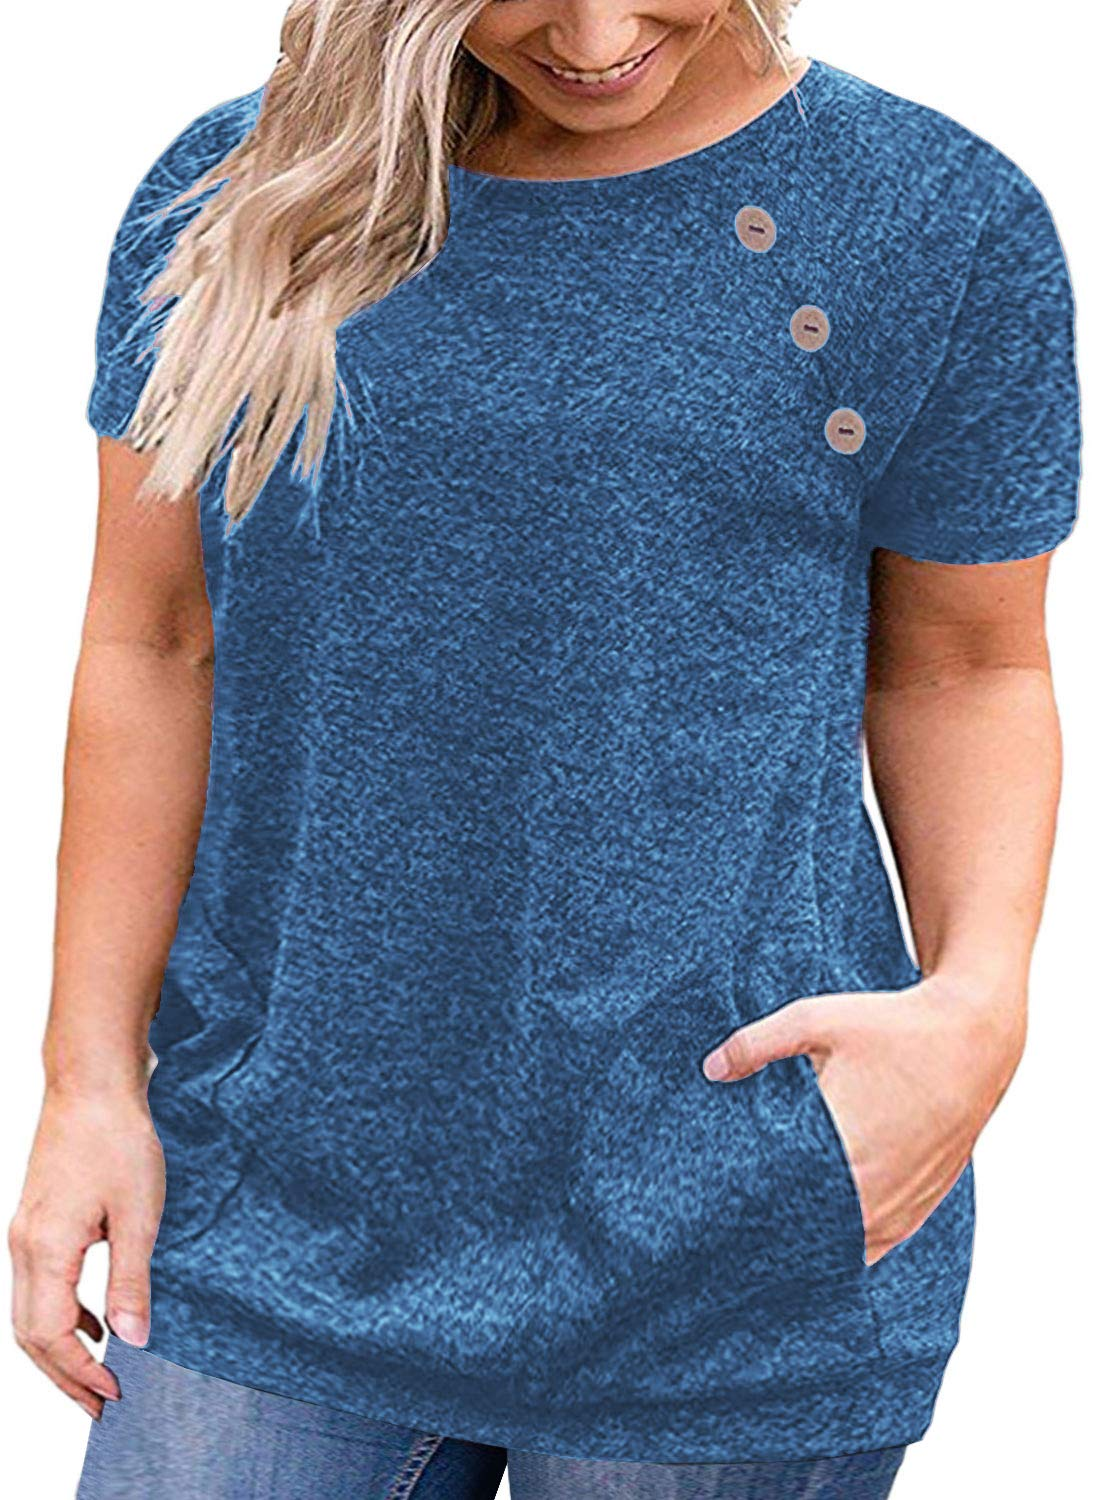 VISLILY Womens Plus Size Tops Buttons Decor T Shirt Short Sleeve